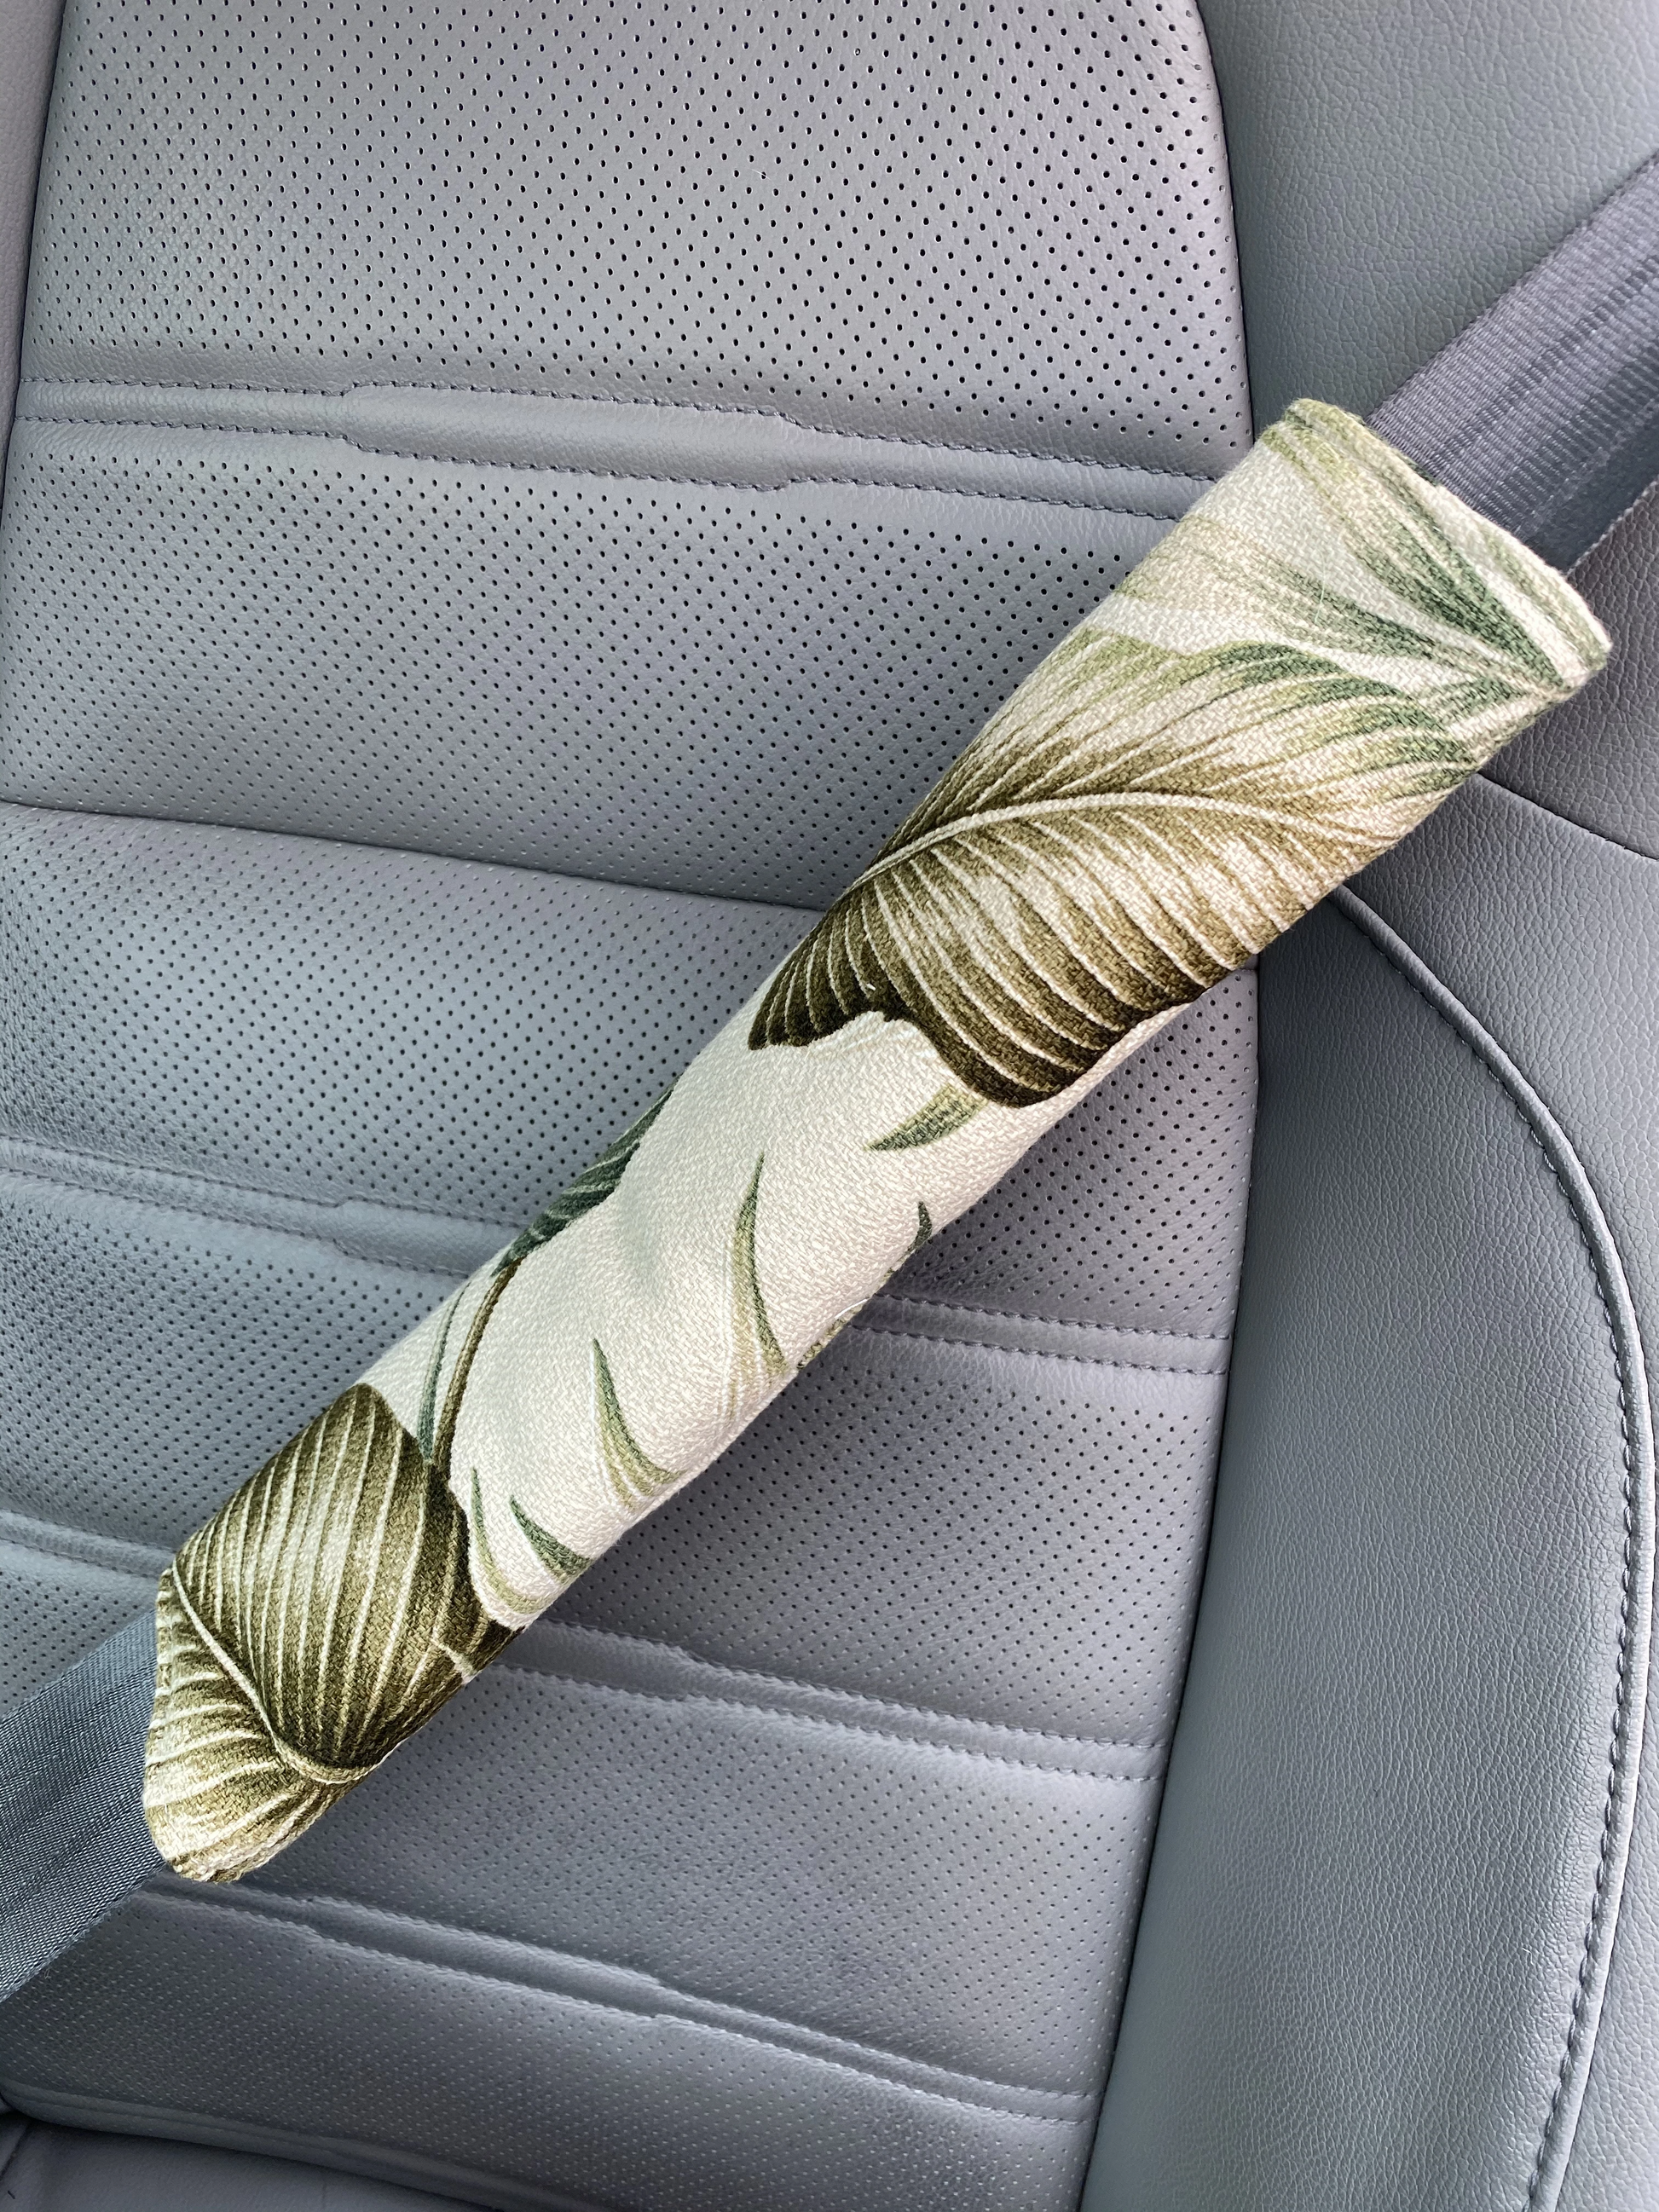 Hawaiian Seatbelt Cover